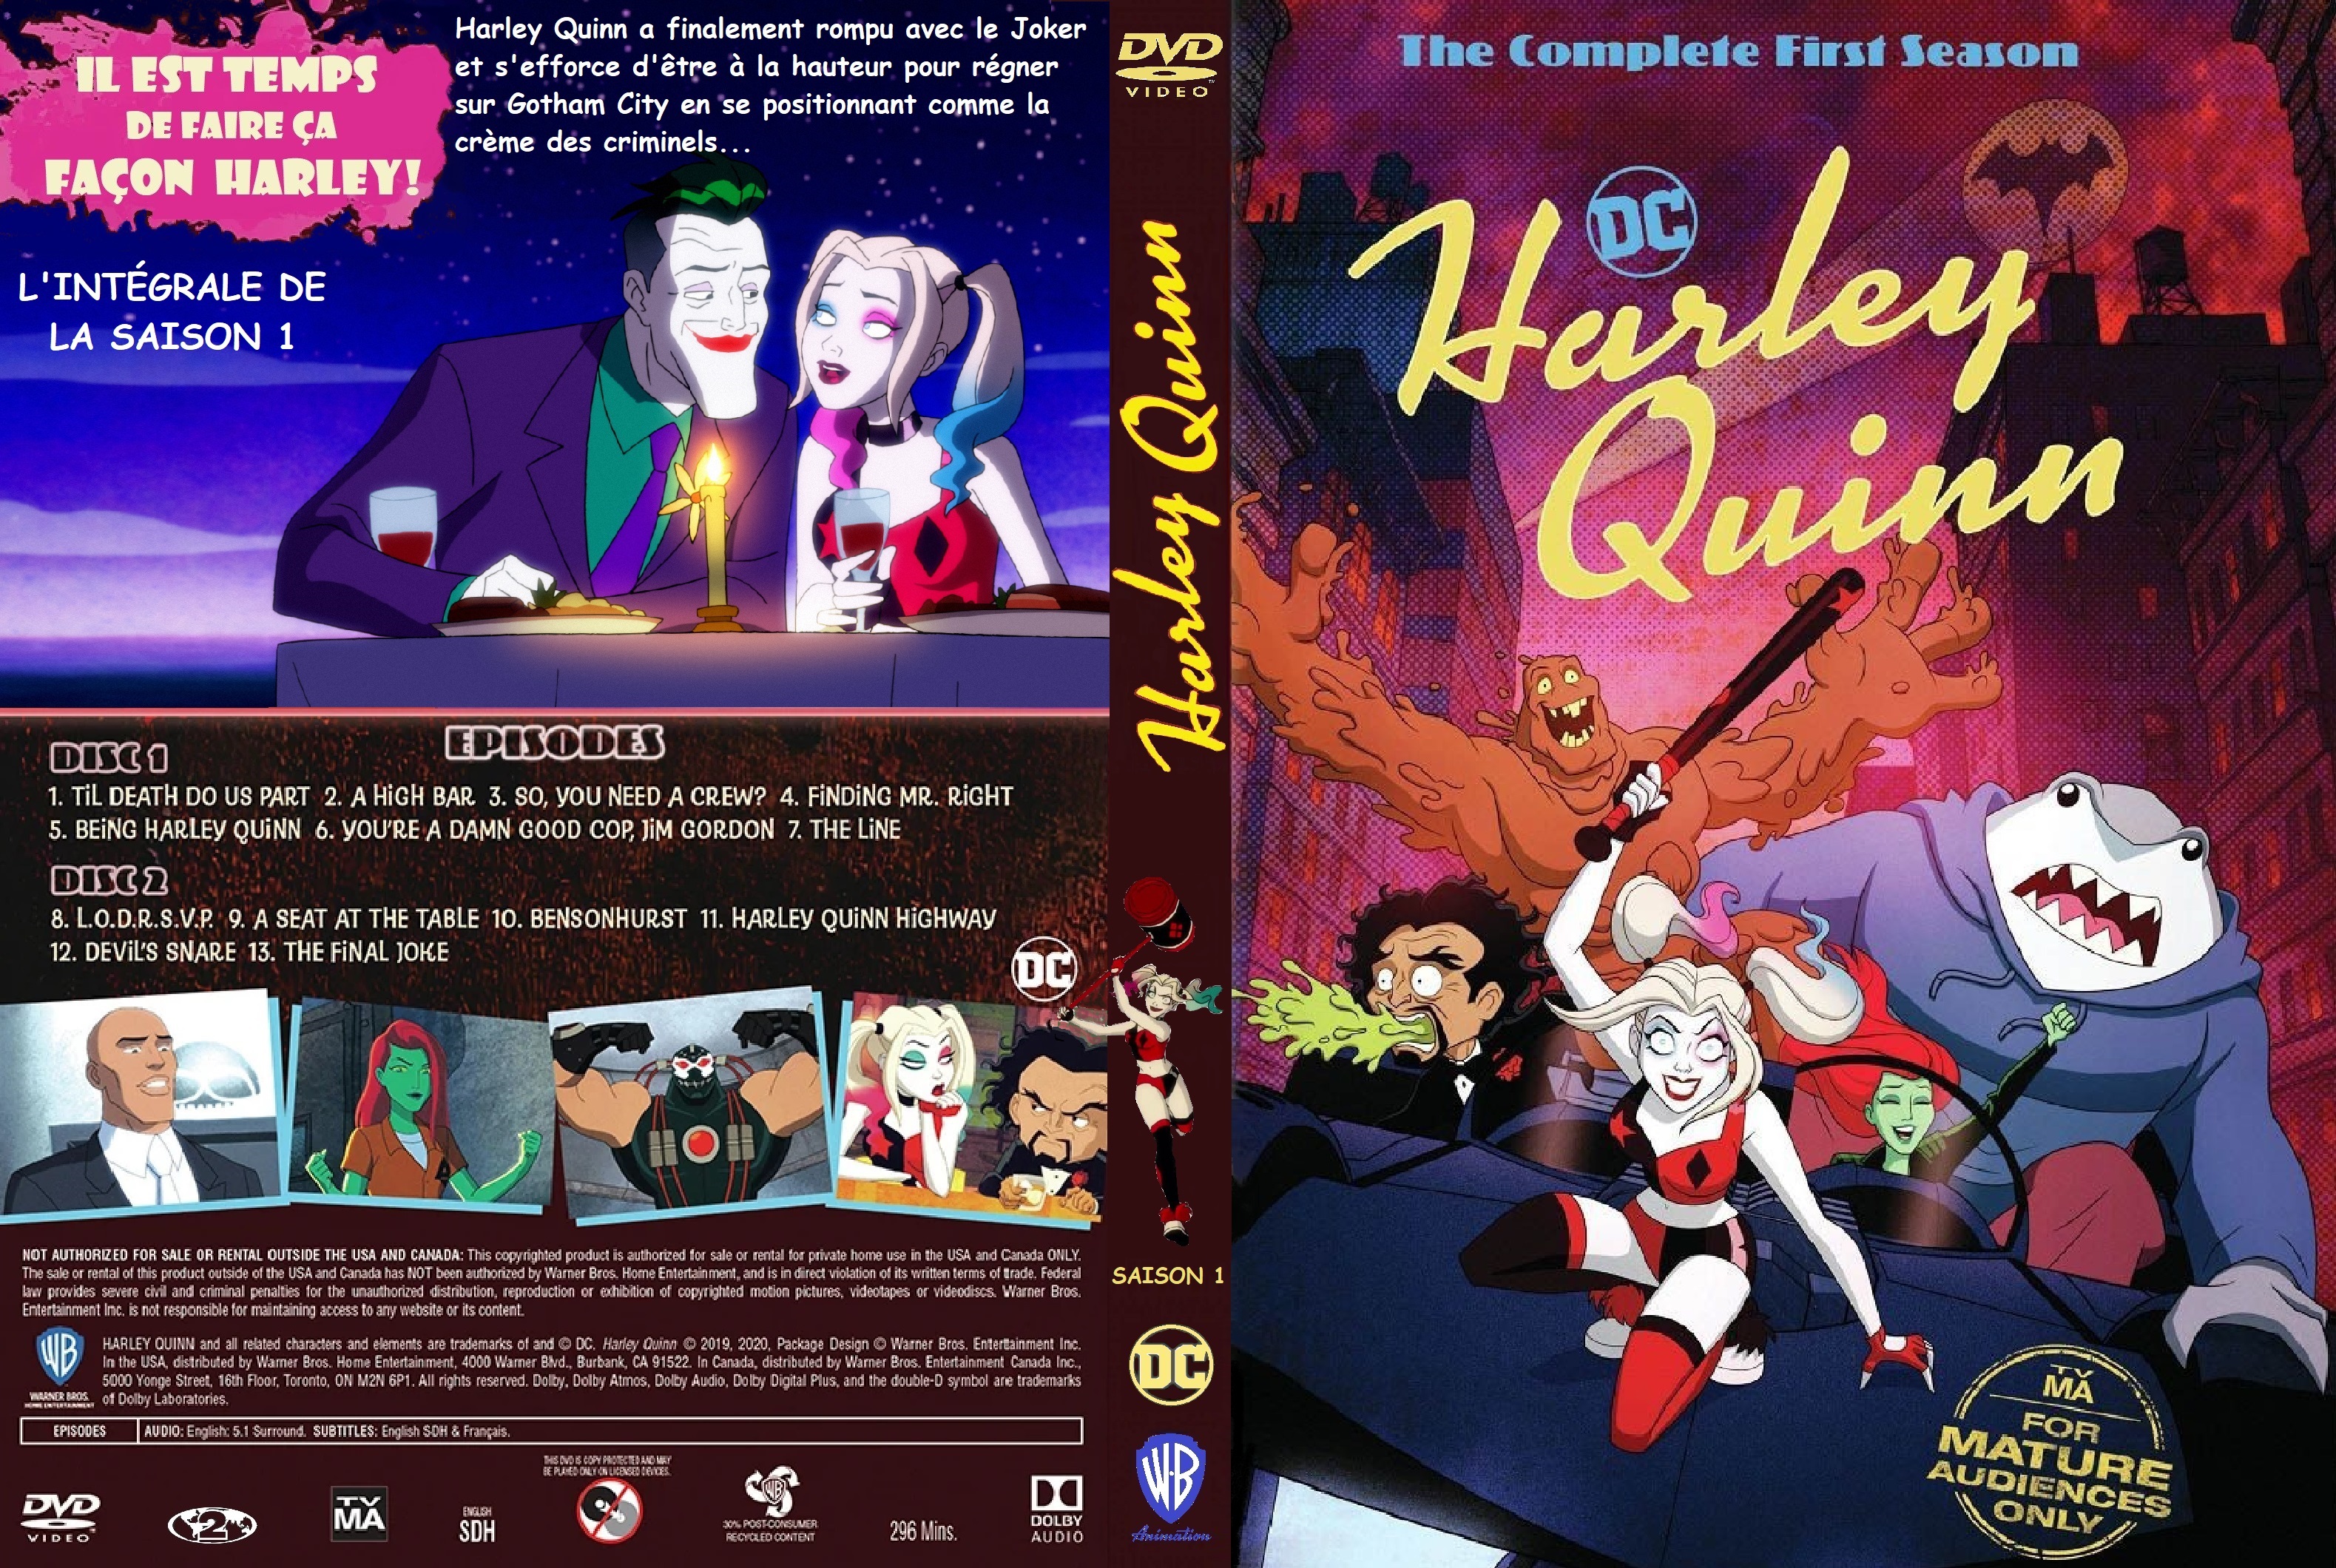 Jaquette DVD Harley Quinn saison 1 custom